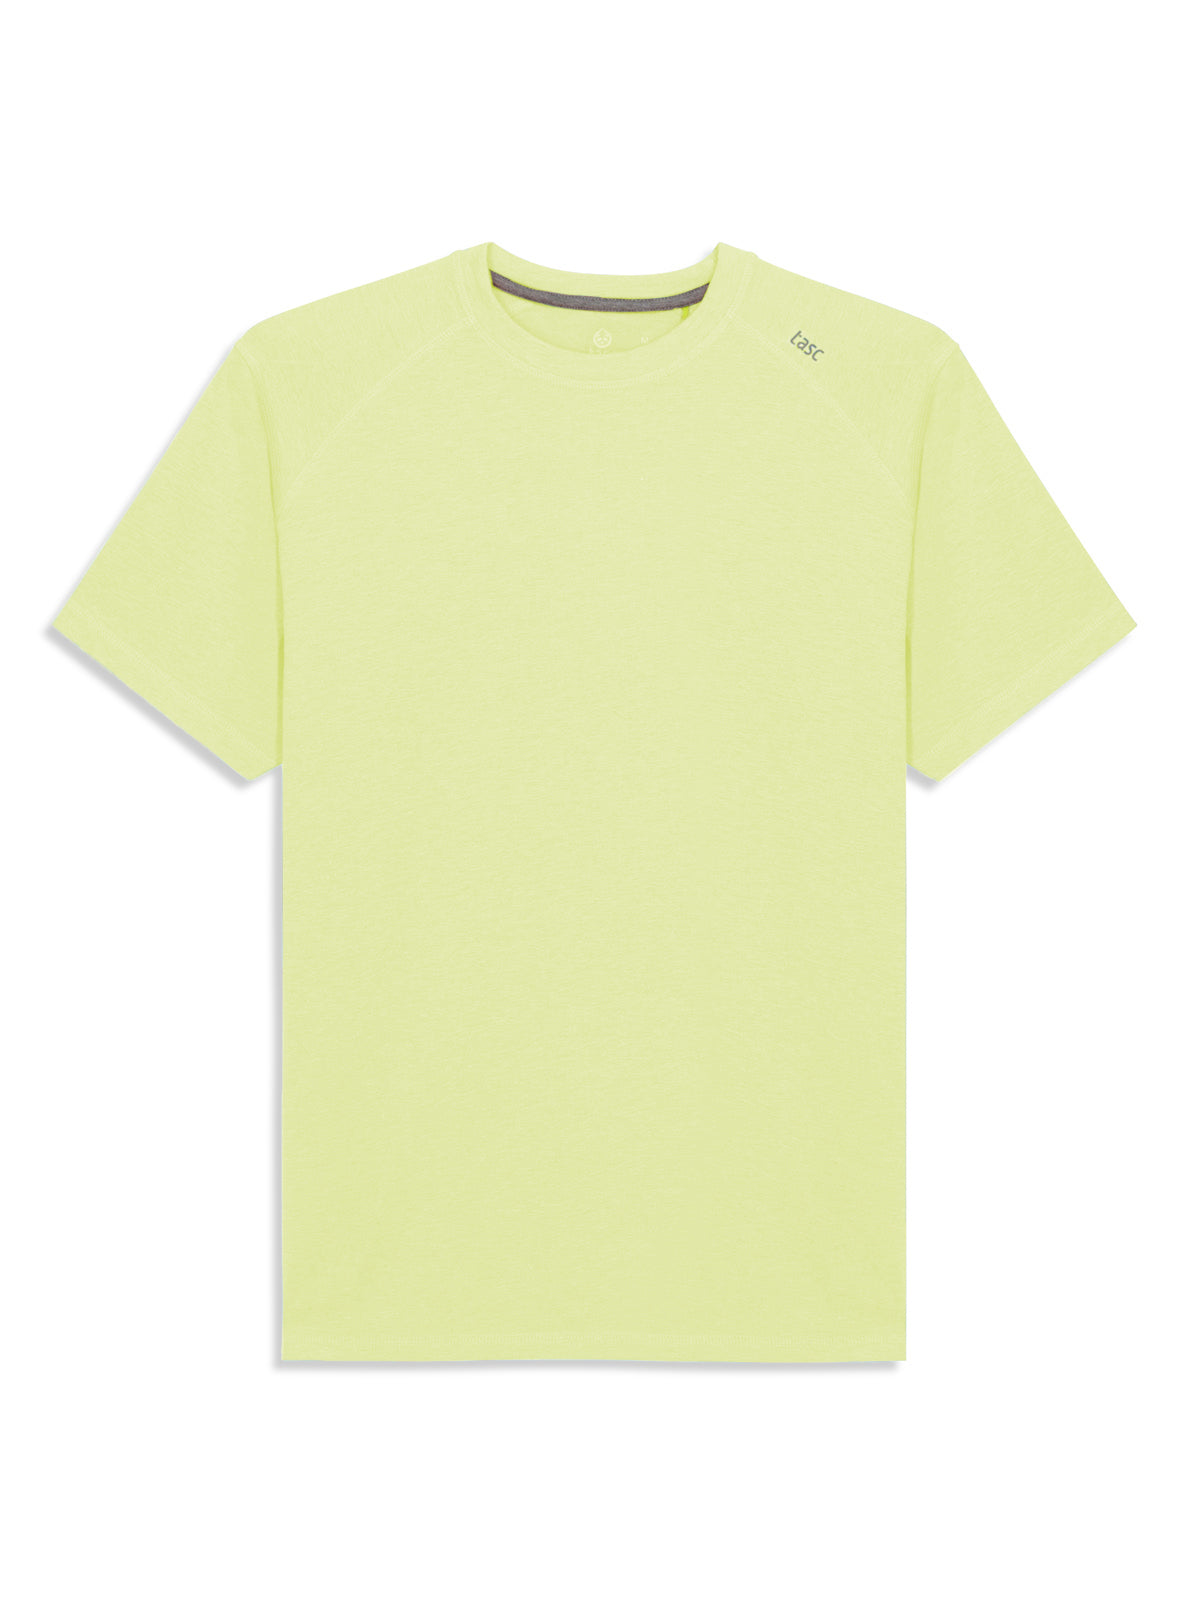 Carrollton Fitness T-Shirt - Seasonal (LimelightHeather)